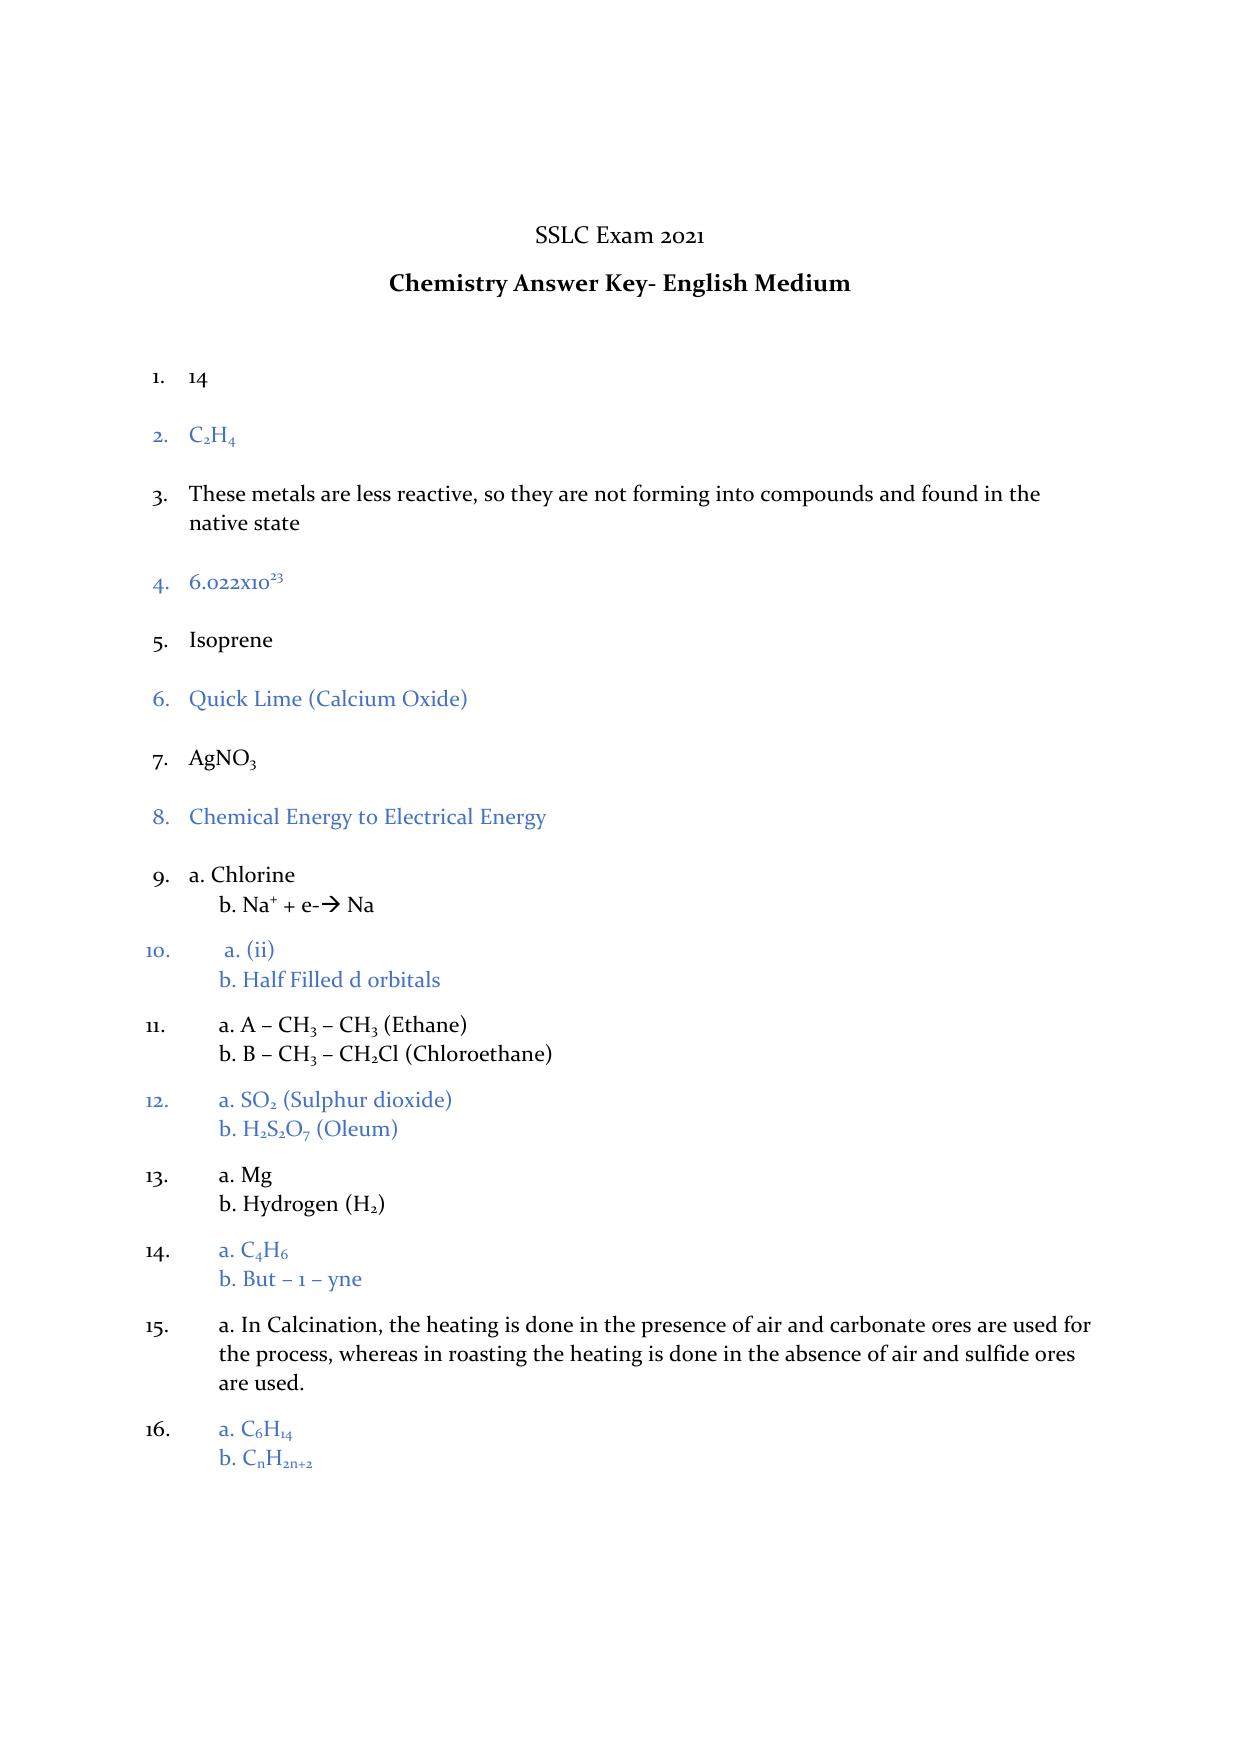 Kerala SSLC 2021 Chemistry Answer Key (EM) - Page 1